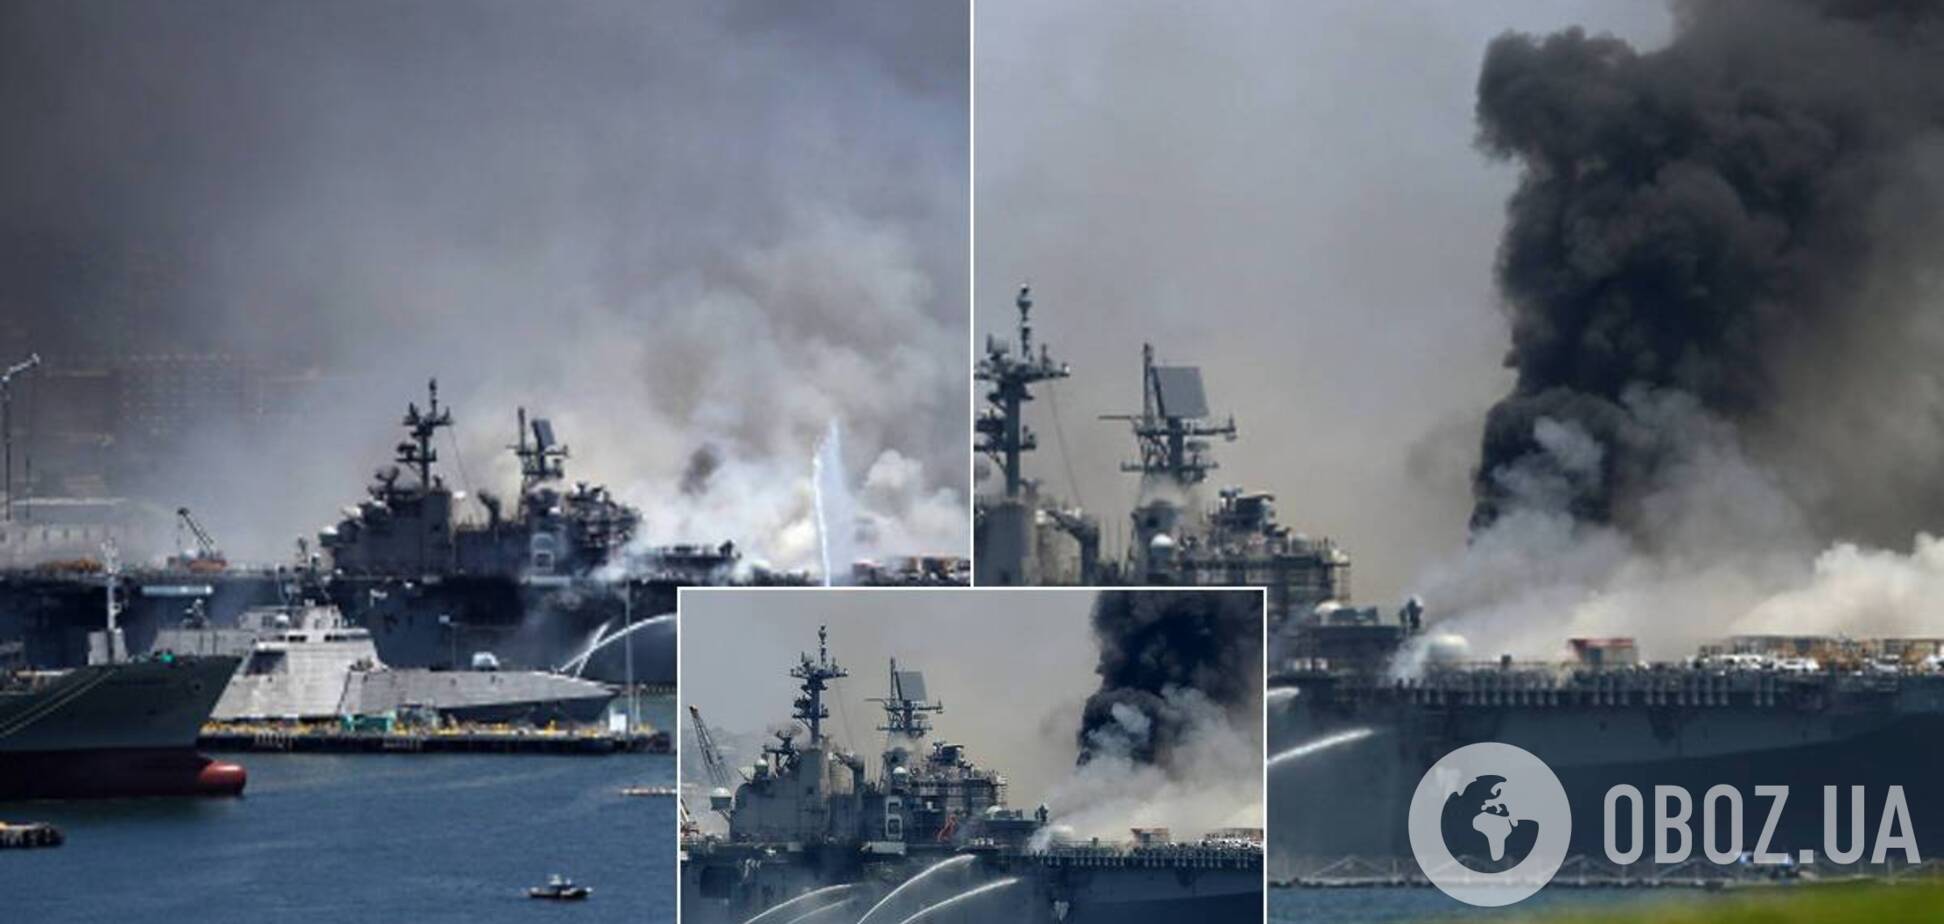 Пожар на военном корабле США 'Боном Ричард'